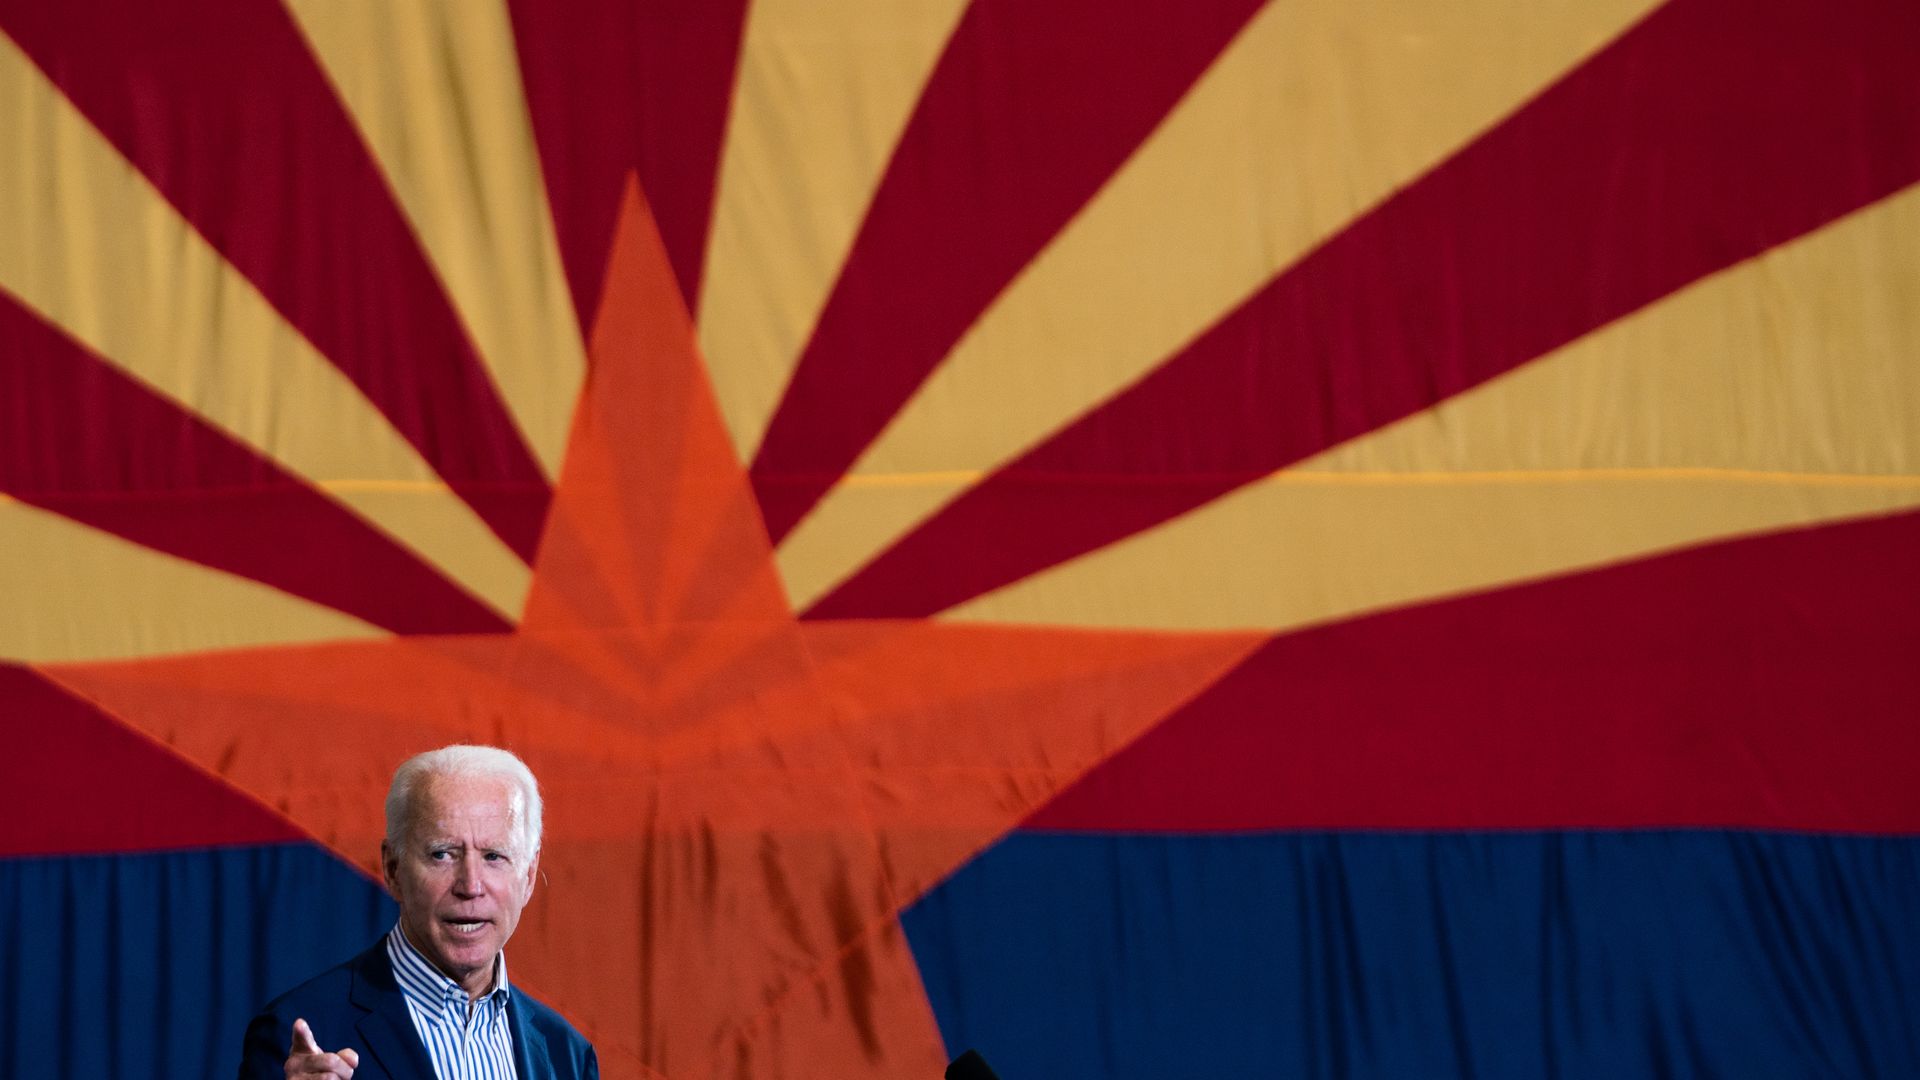 Joe Biden speaks in front of a large Arizona state flag.